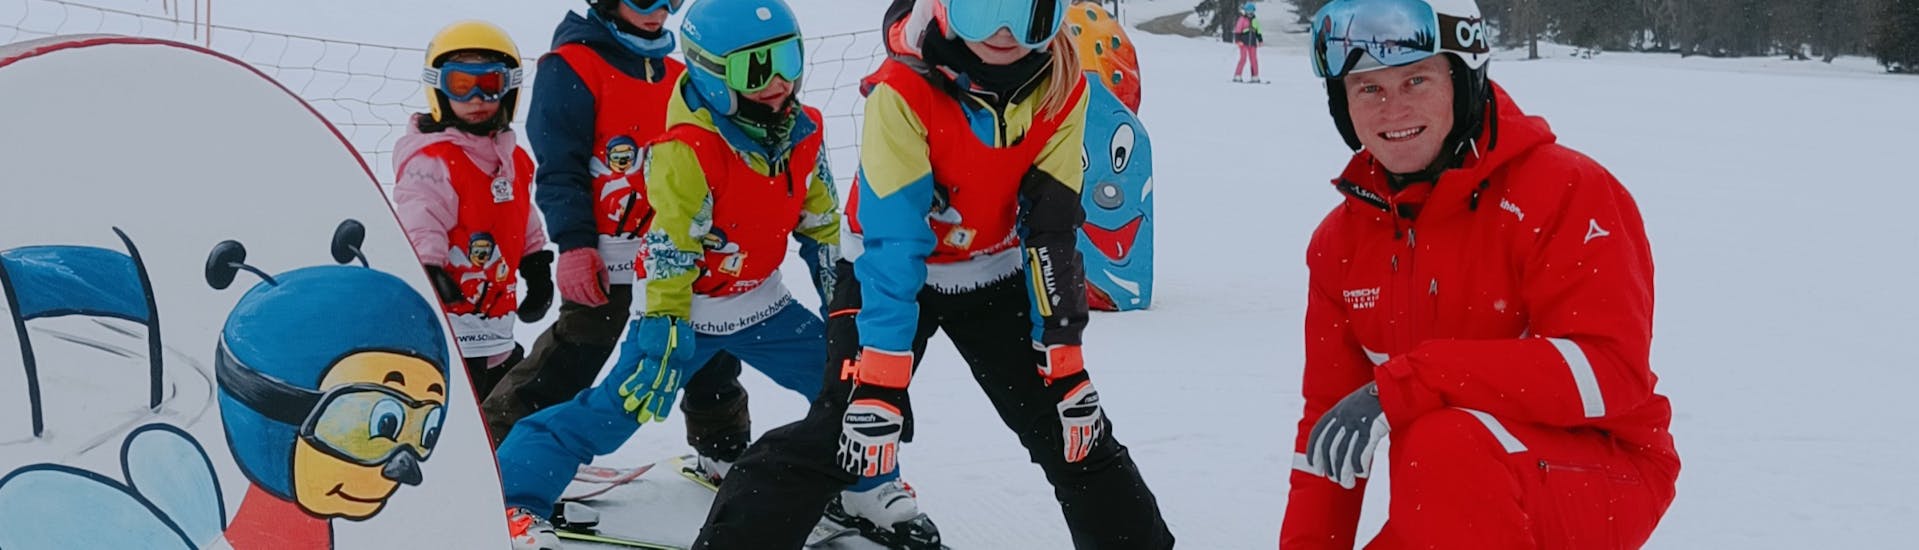 Children at their kids ski lessons for advanced skiers with the ski school Kreischberg - Mayer.